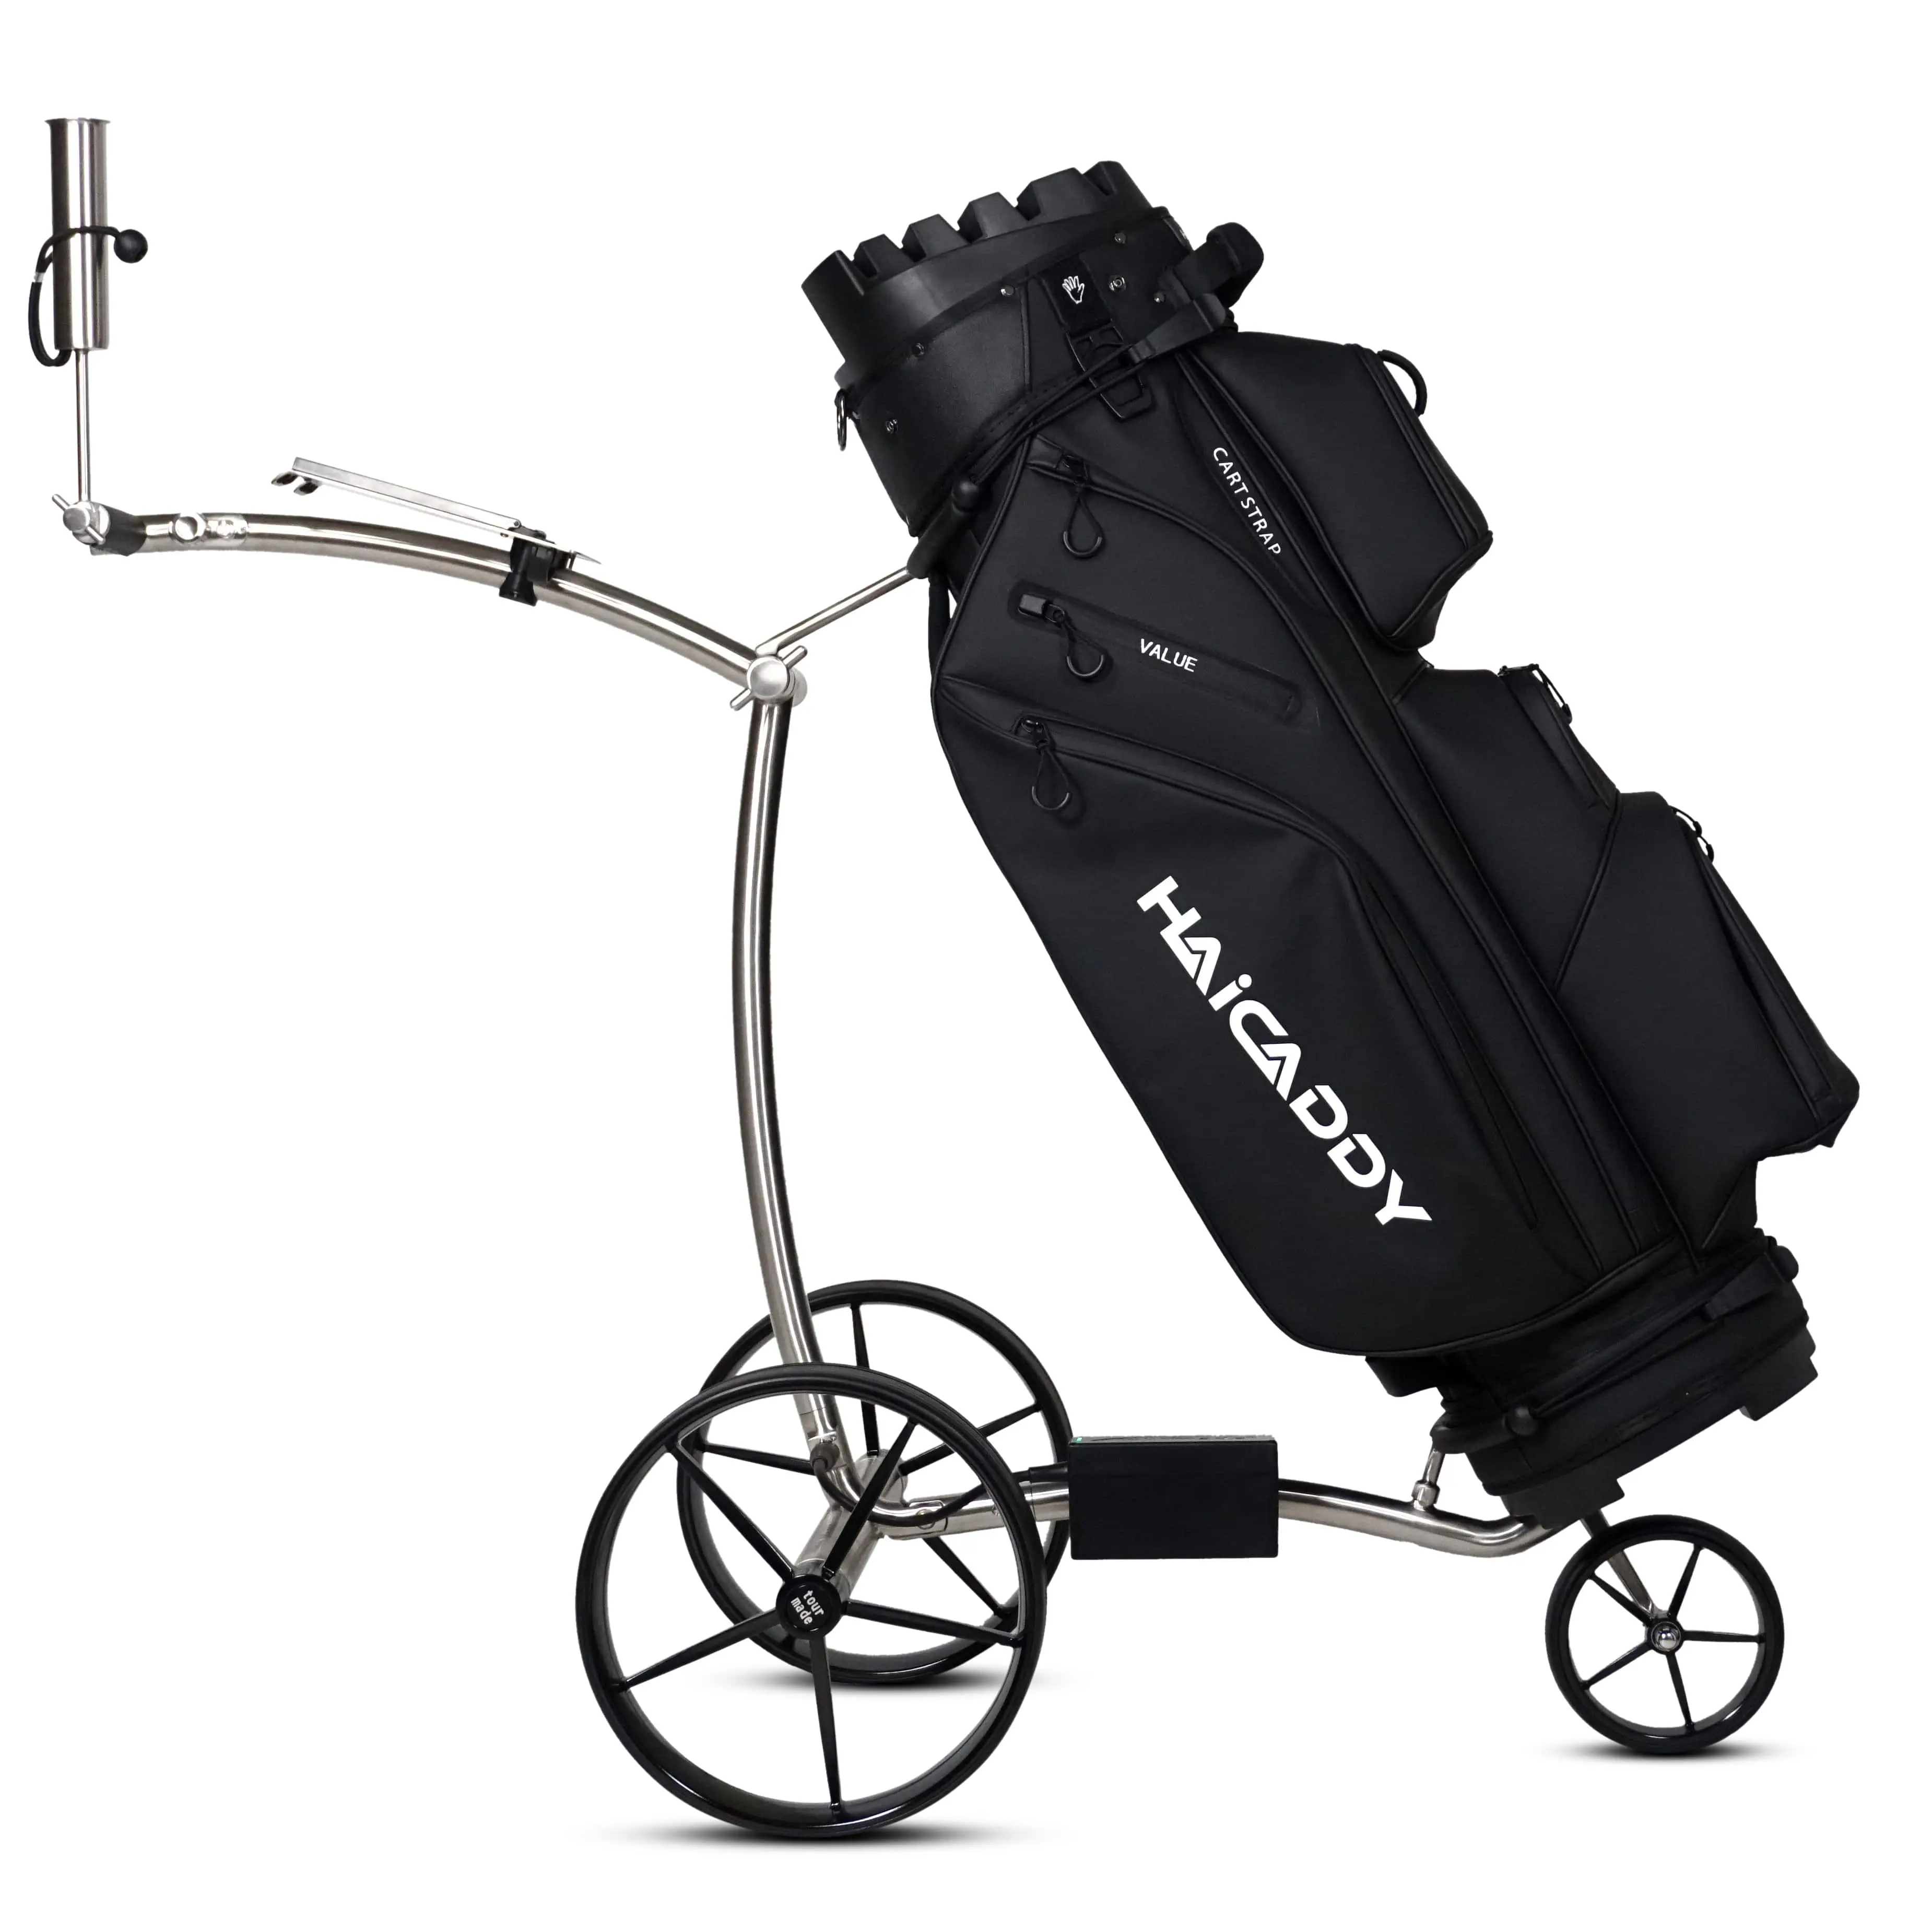 Carrello da golf elettrico Tour Made Haicaddy® HC7S BRUSHED Edition